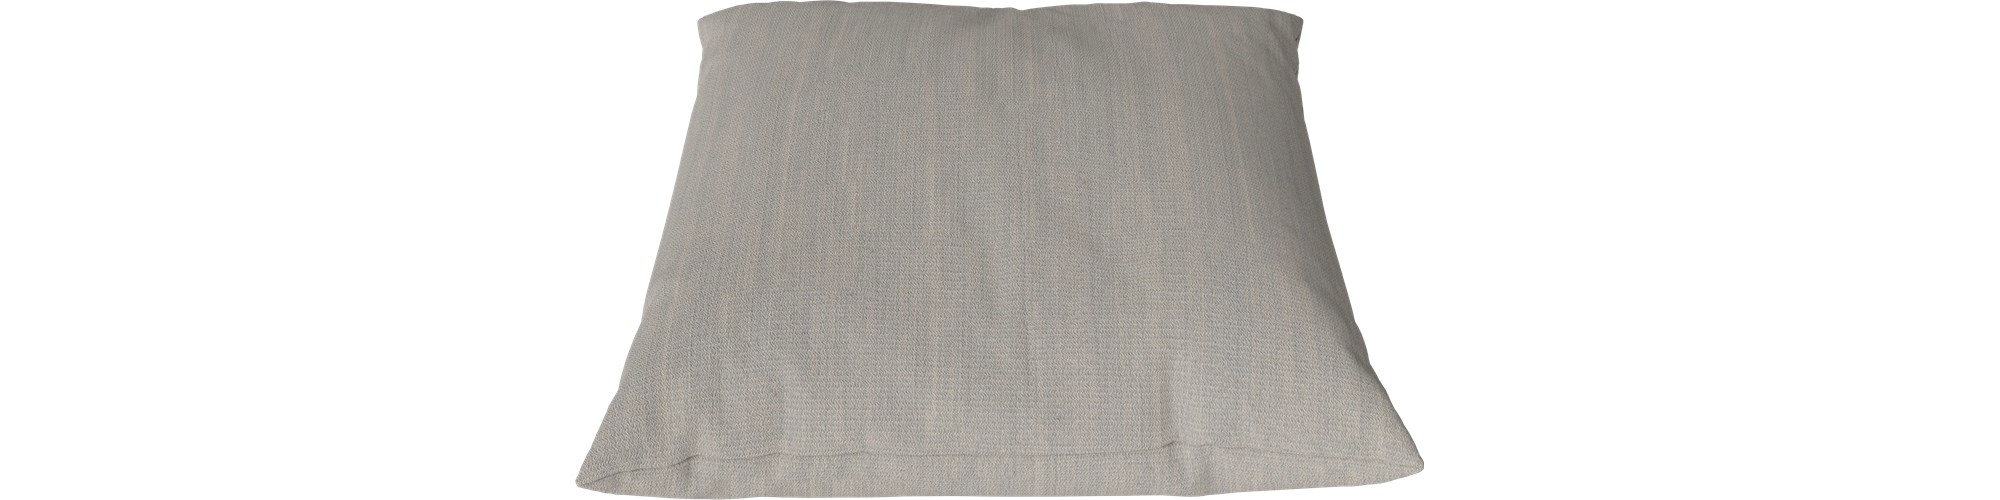 Classic Cushion by Bolia | Steelcase